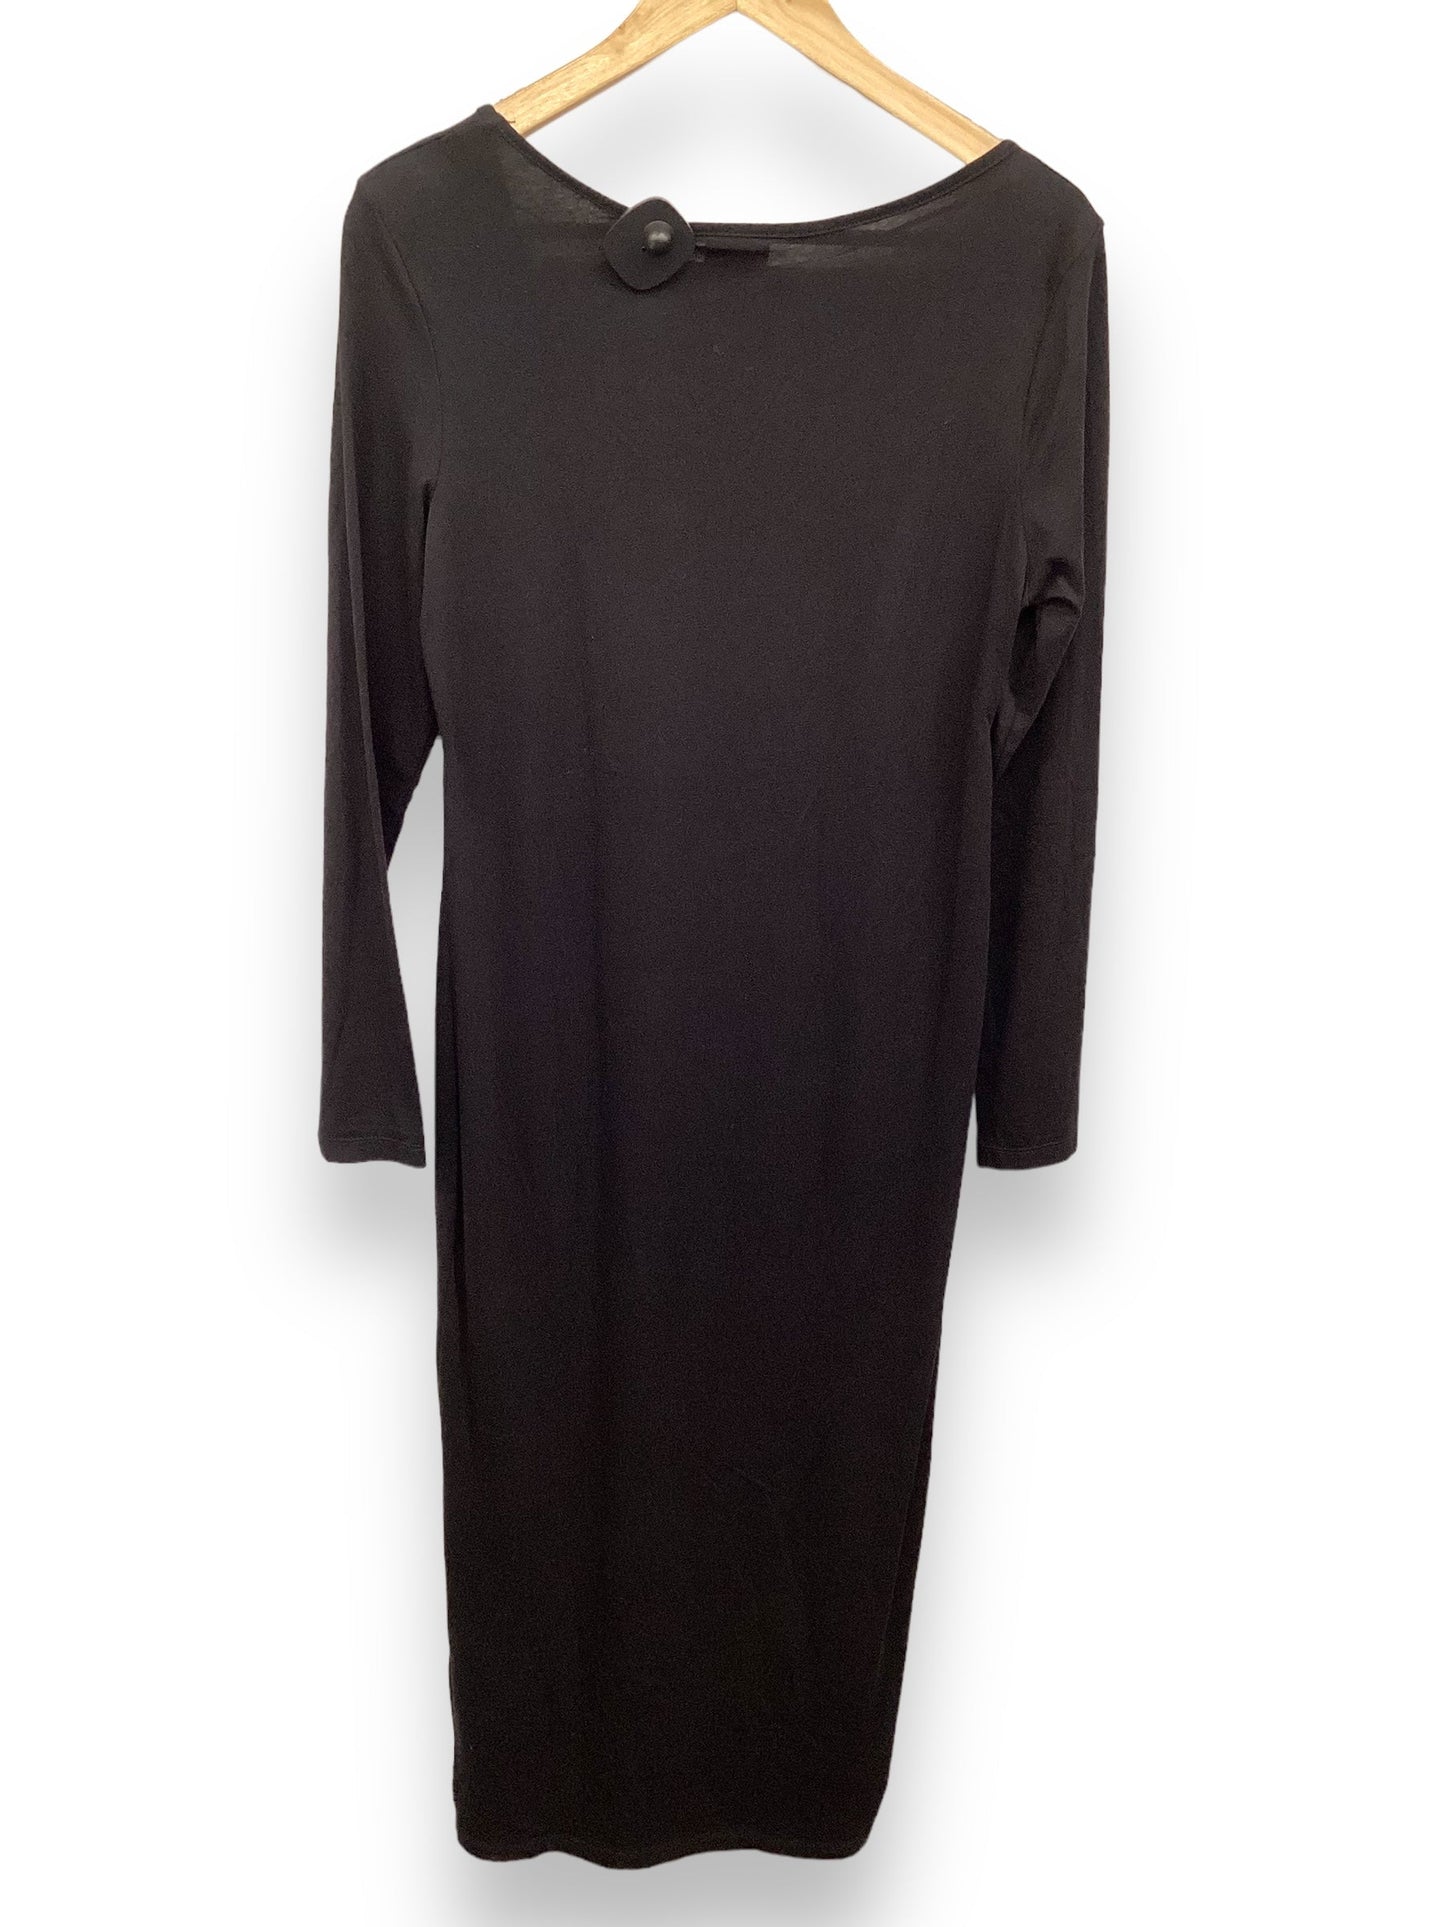 Black Dress Casual Maxi H&m, Size M